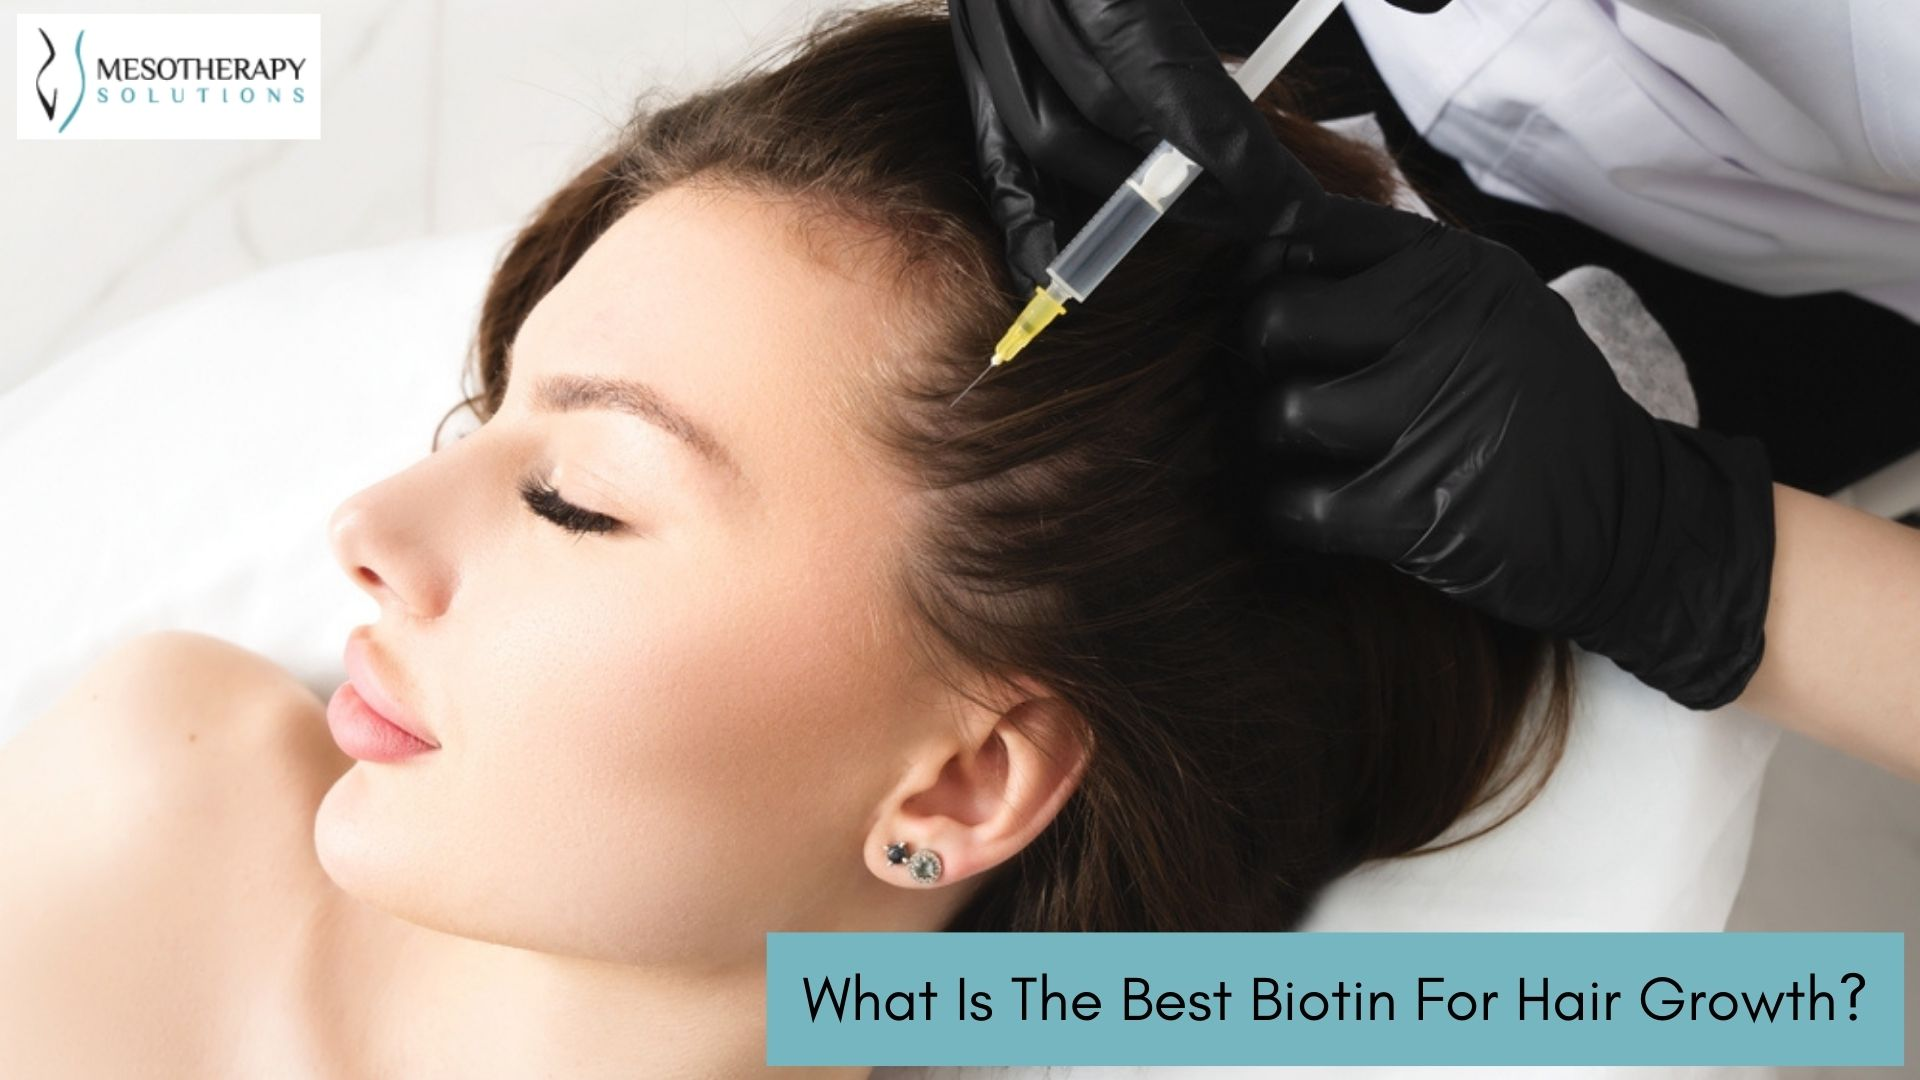 Does Biotin Help Your Hair Grow?